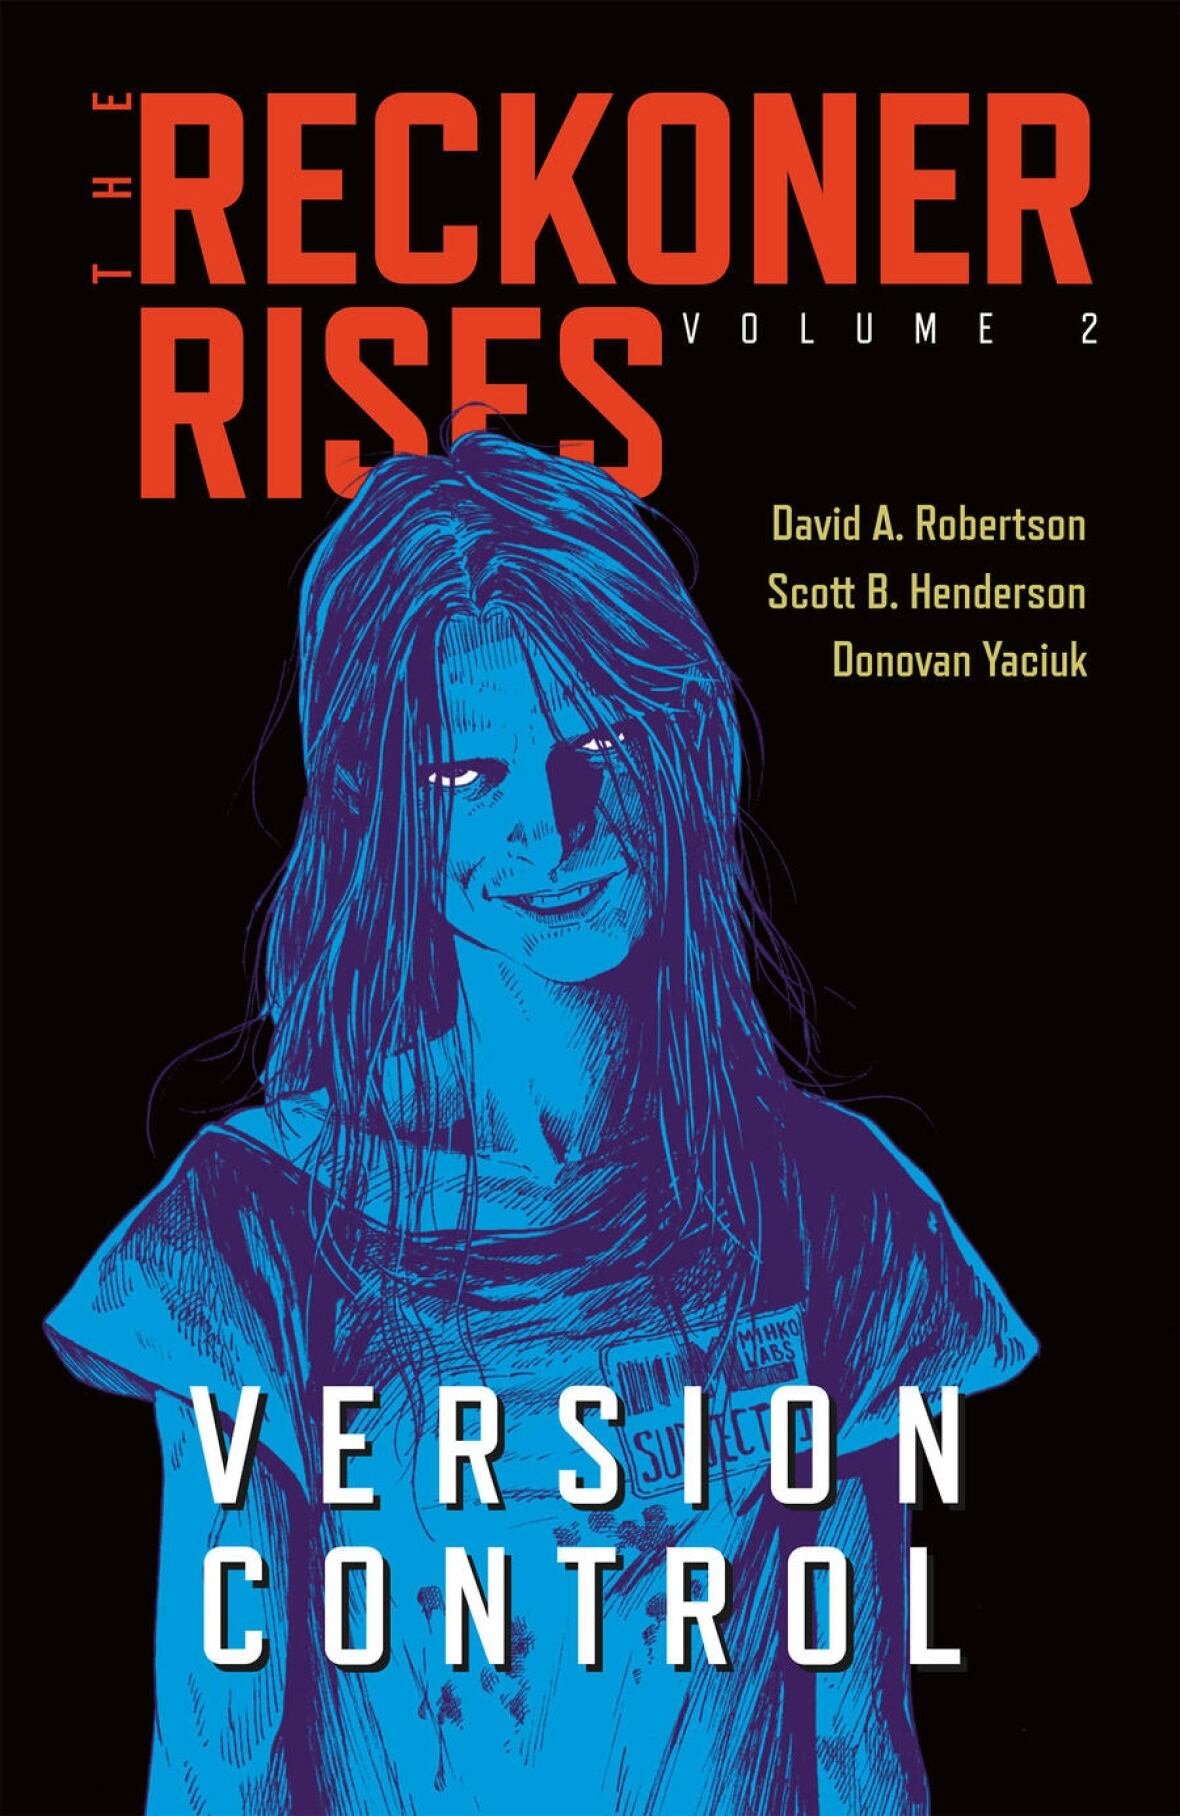 book-cover-the-reckoner-rises-version-control-by-david-a-robertson-scott-b-henderson-donovan.jpg